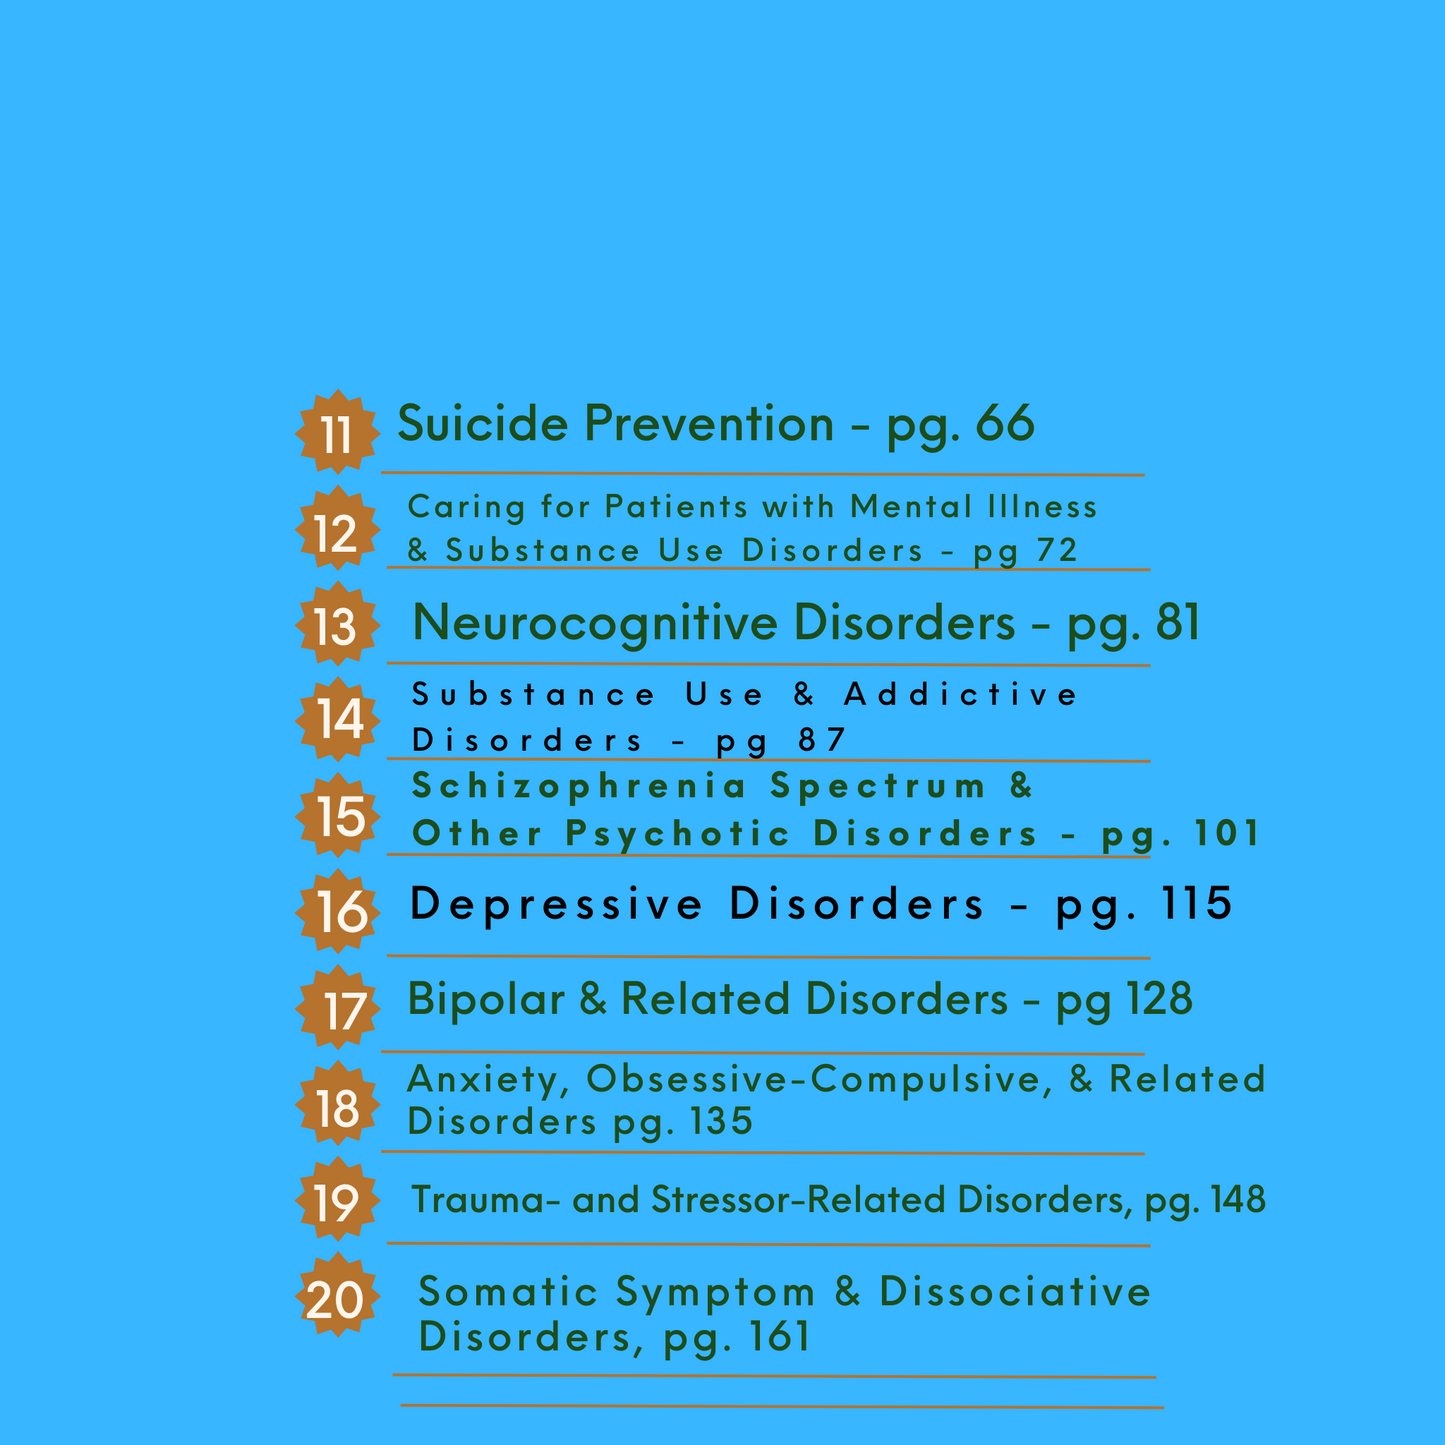 Essentials of Psychiatric Mental Health Nursing Test Bank 8th Ed Study Guide